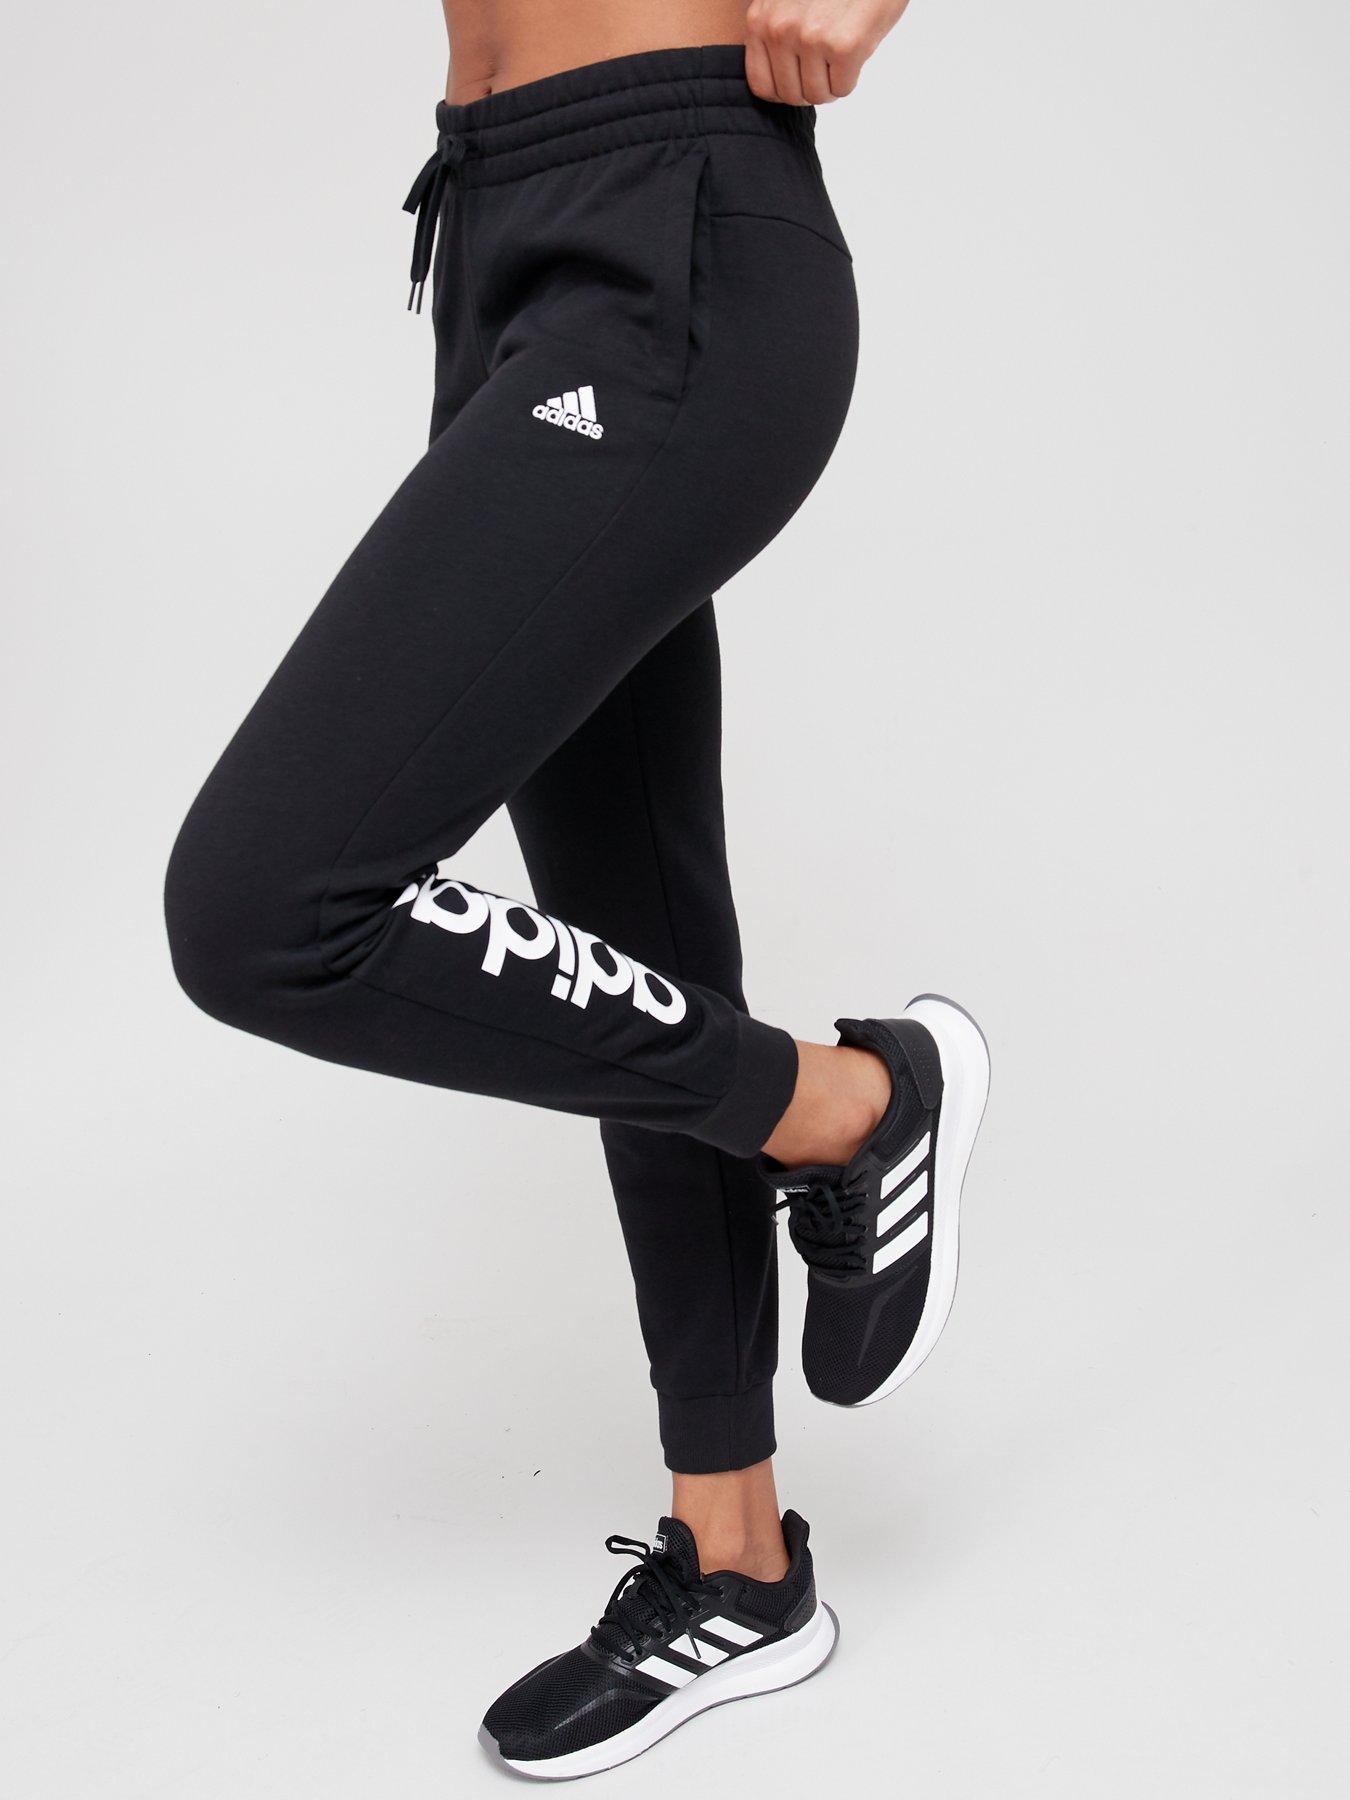 acortar Cinco gritar Adidas | Jogging bottoms | Womens sports clothing | Sports & leisure |  www.littlewoods.com